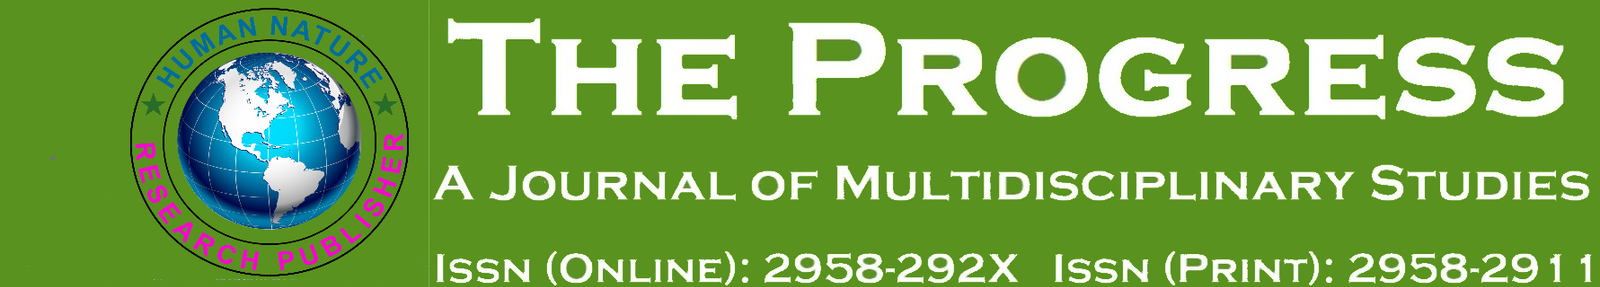 THE PROGRESS: A Journal of Multidisciplinary Studies